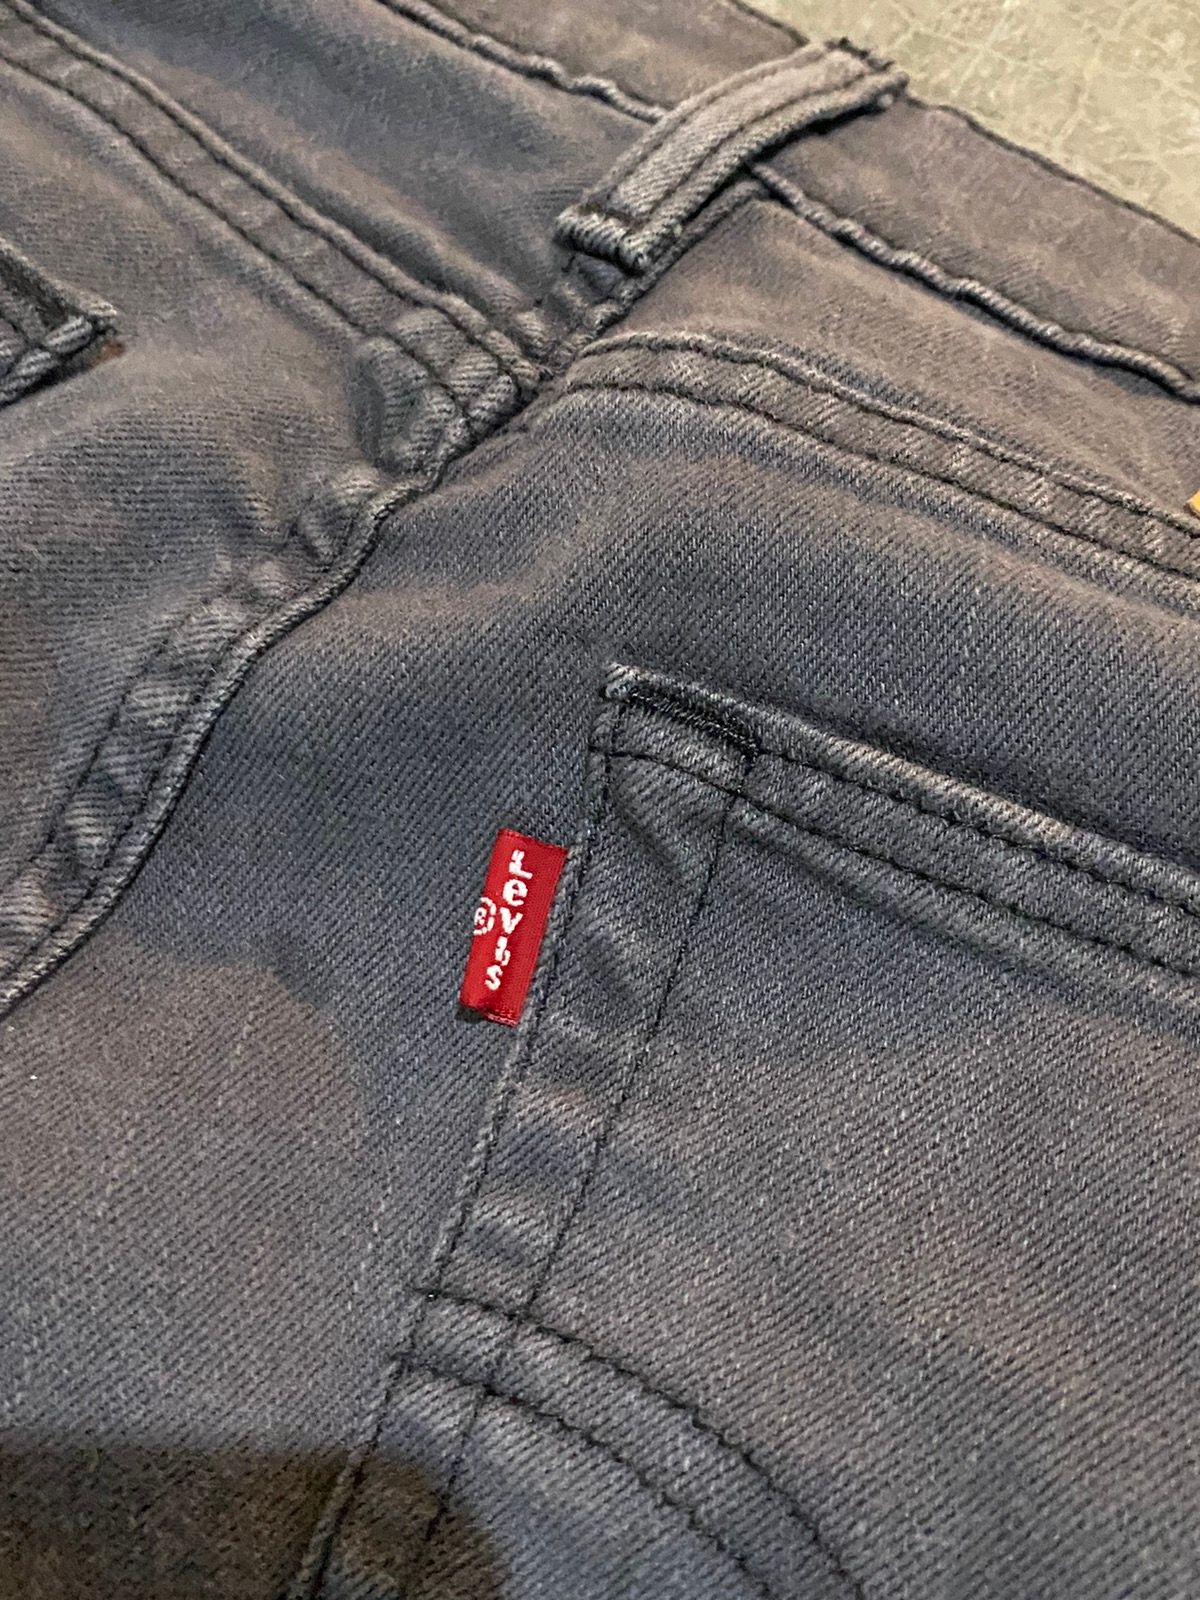 Vintage Grey Levi 511 Jeans 31x32 Size US 31 - 9 Thumbnail